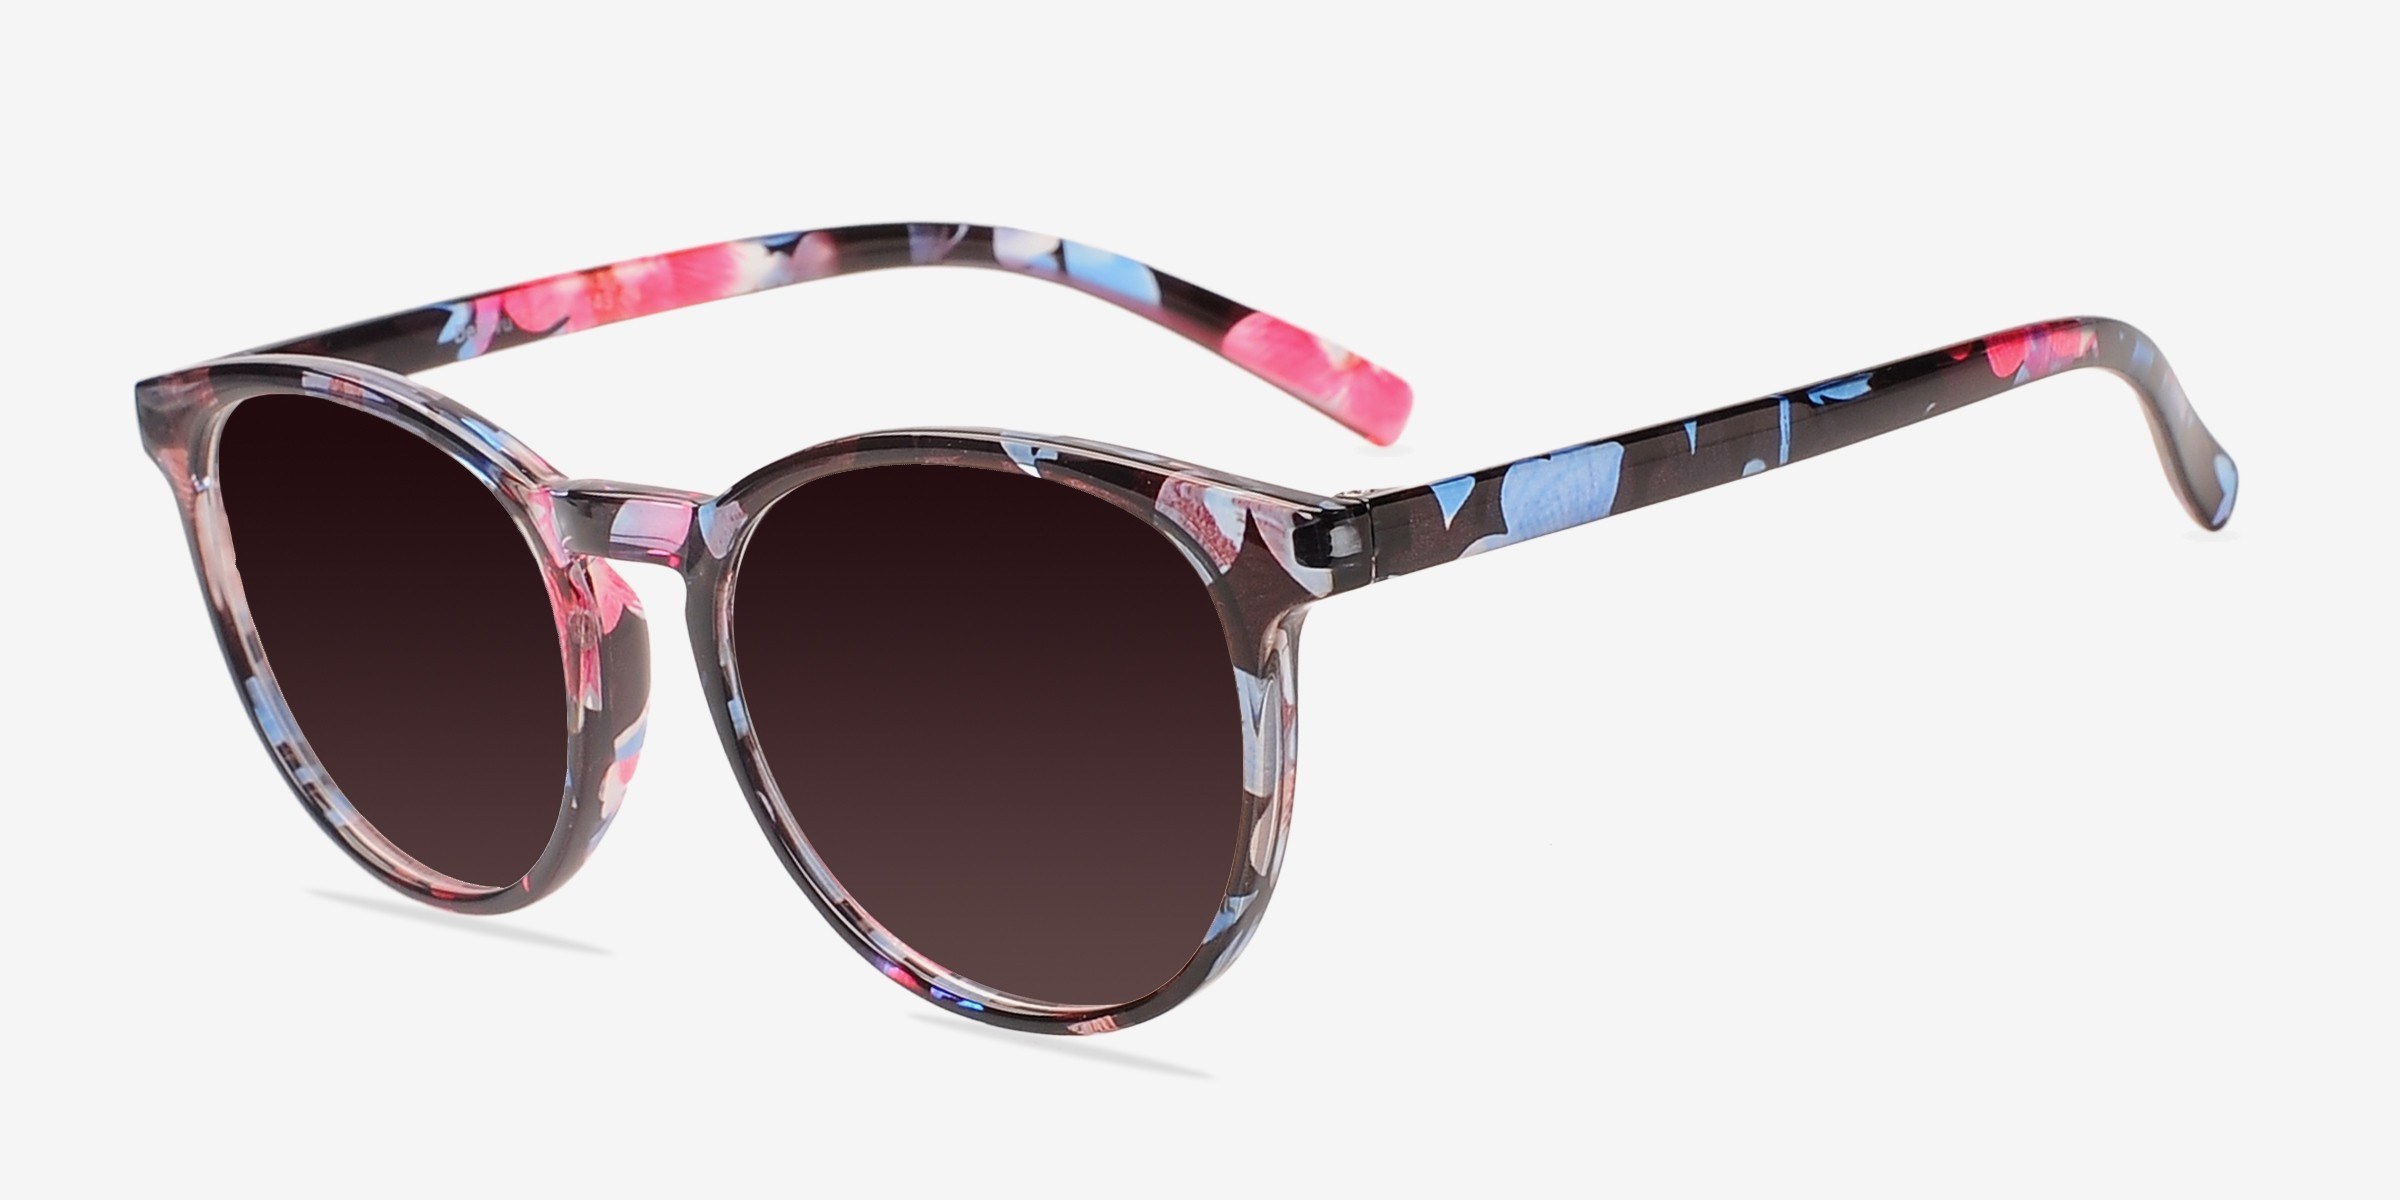 Deja Vu - Round Blue & Floral Frame Sunglasses For Women | Eyebuydirect